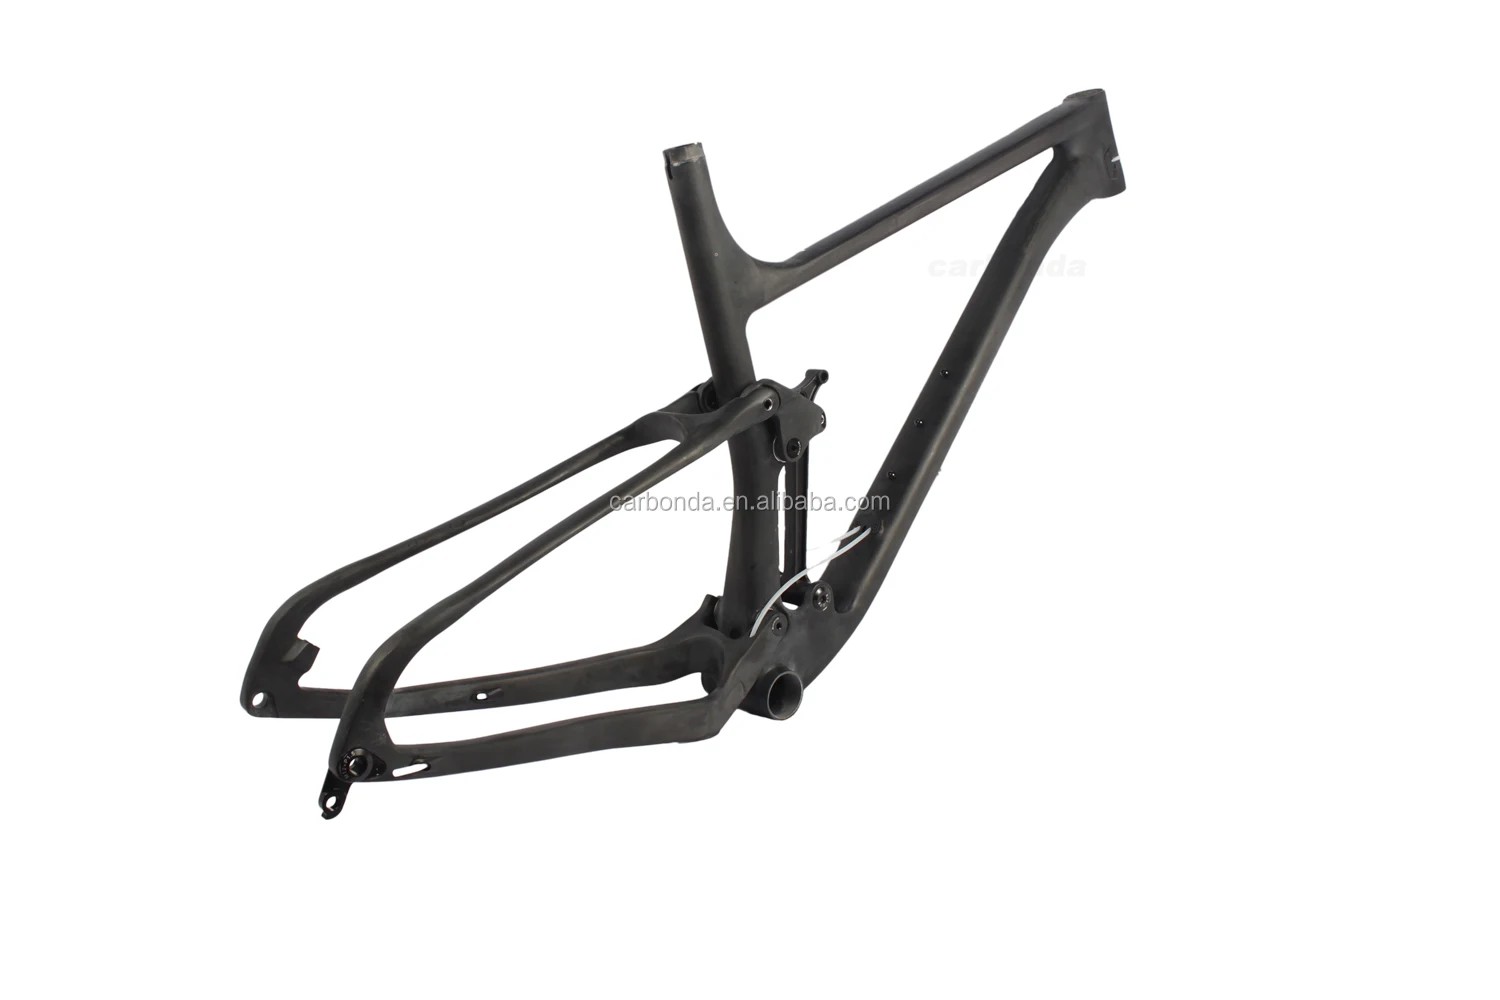 carbonda bike frame